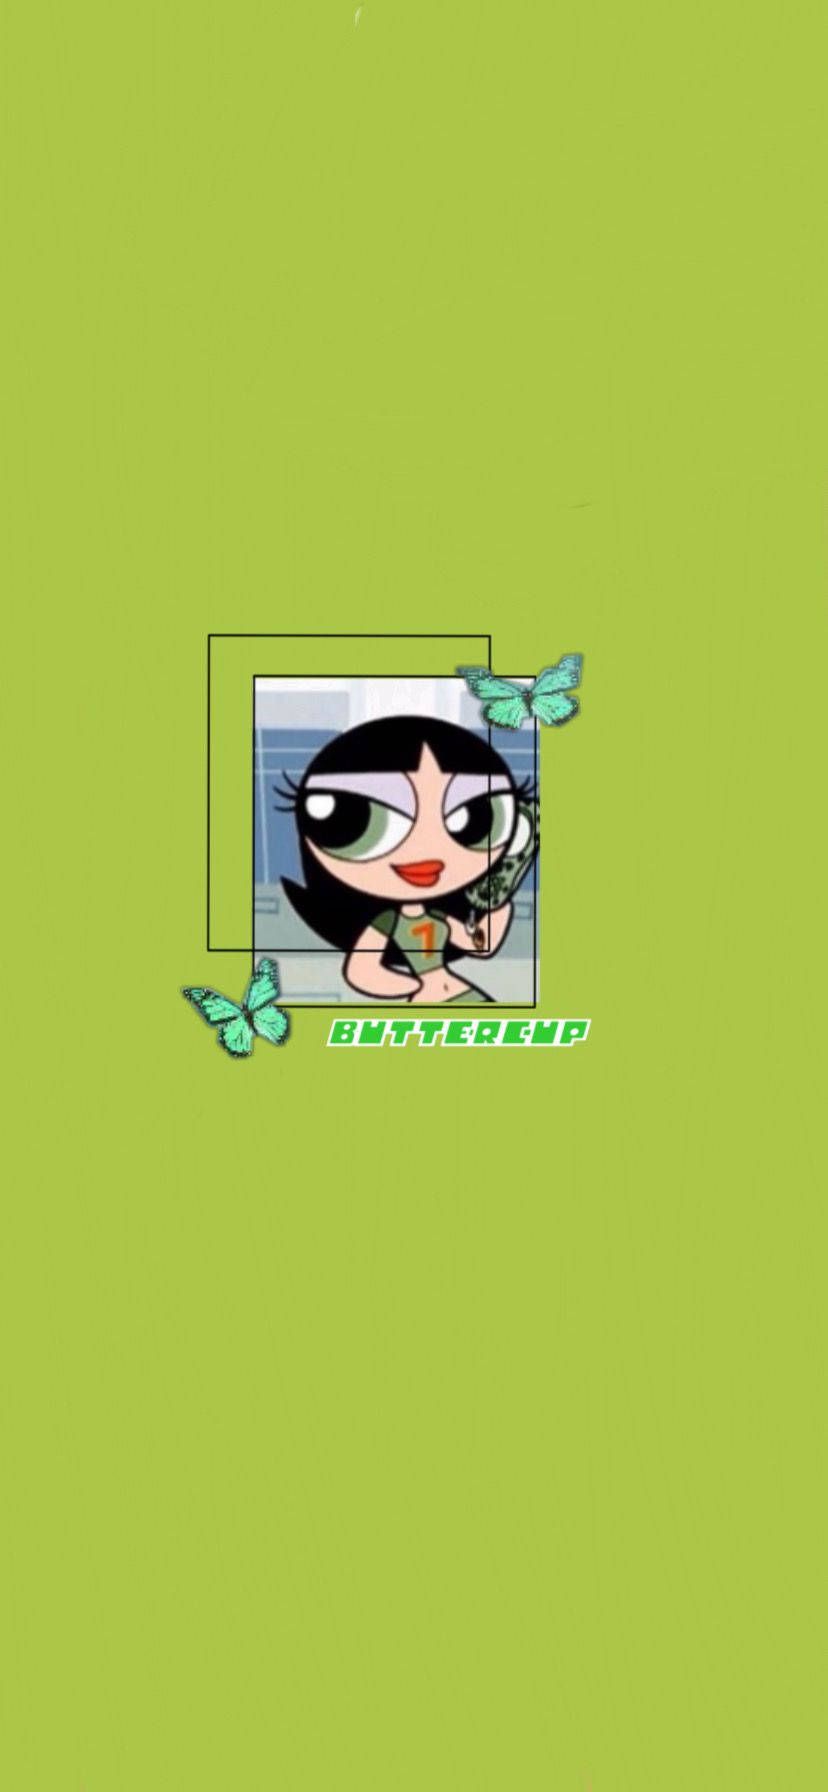 A cartoon character with the words powerpuff girls - Buttercup